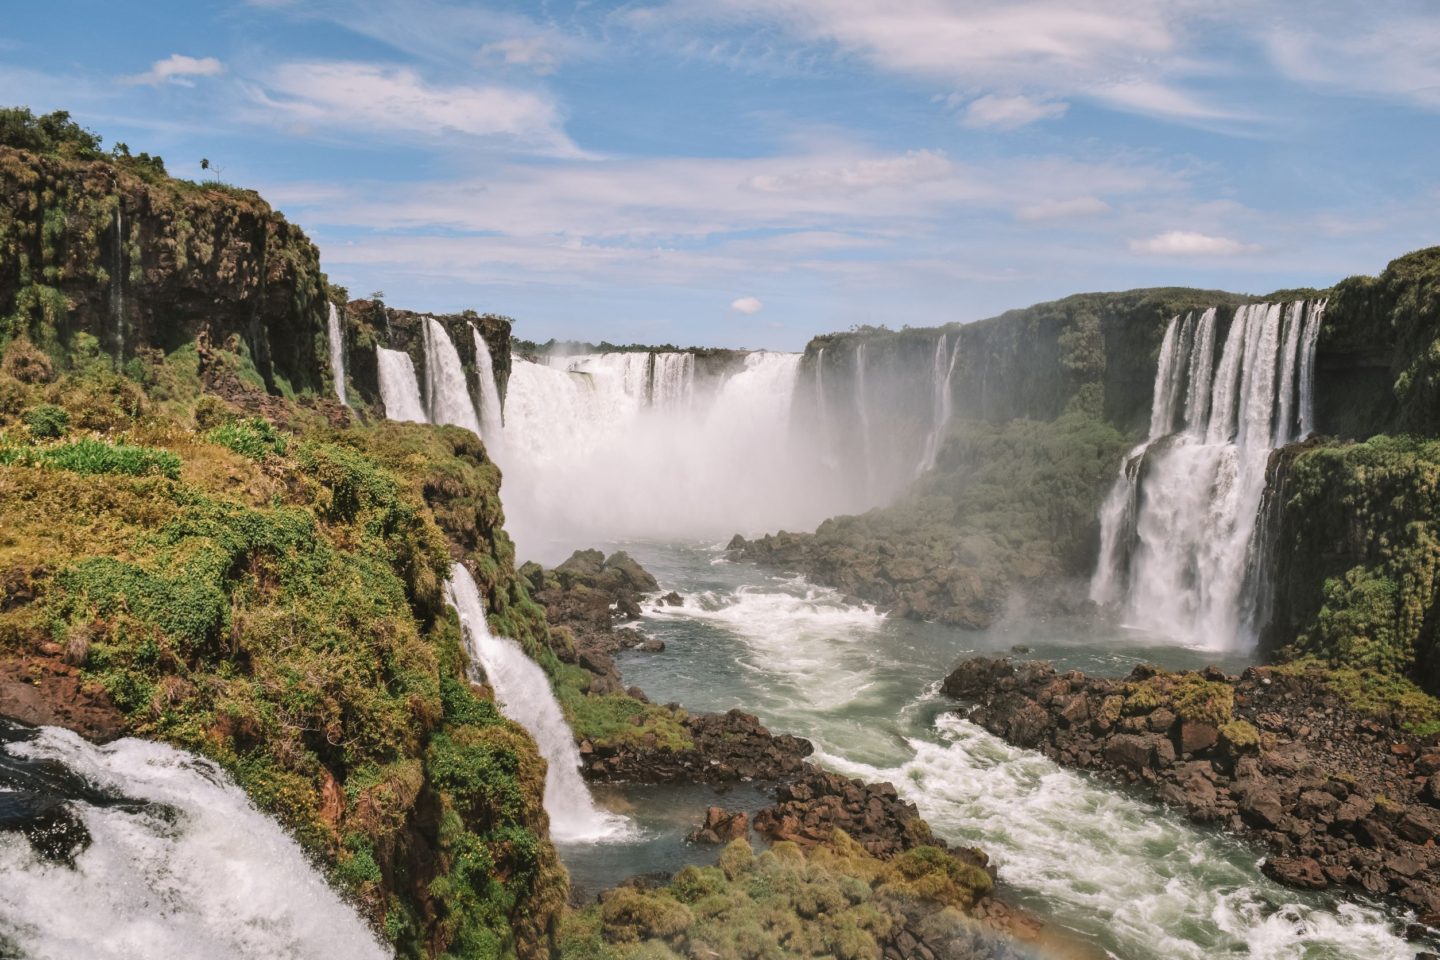 Visiting Iguazu Falls, Brazilian side